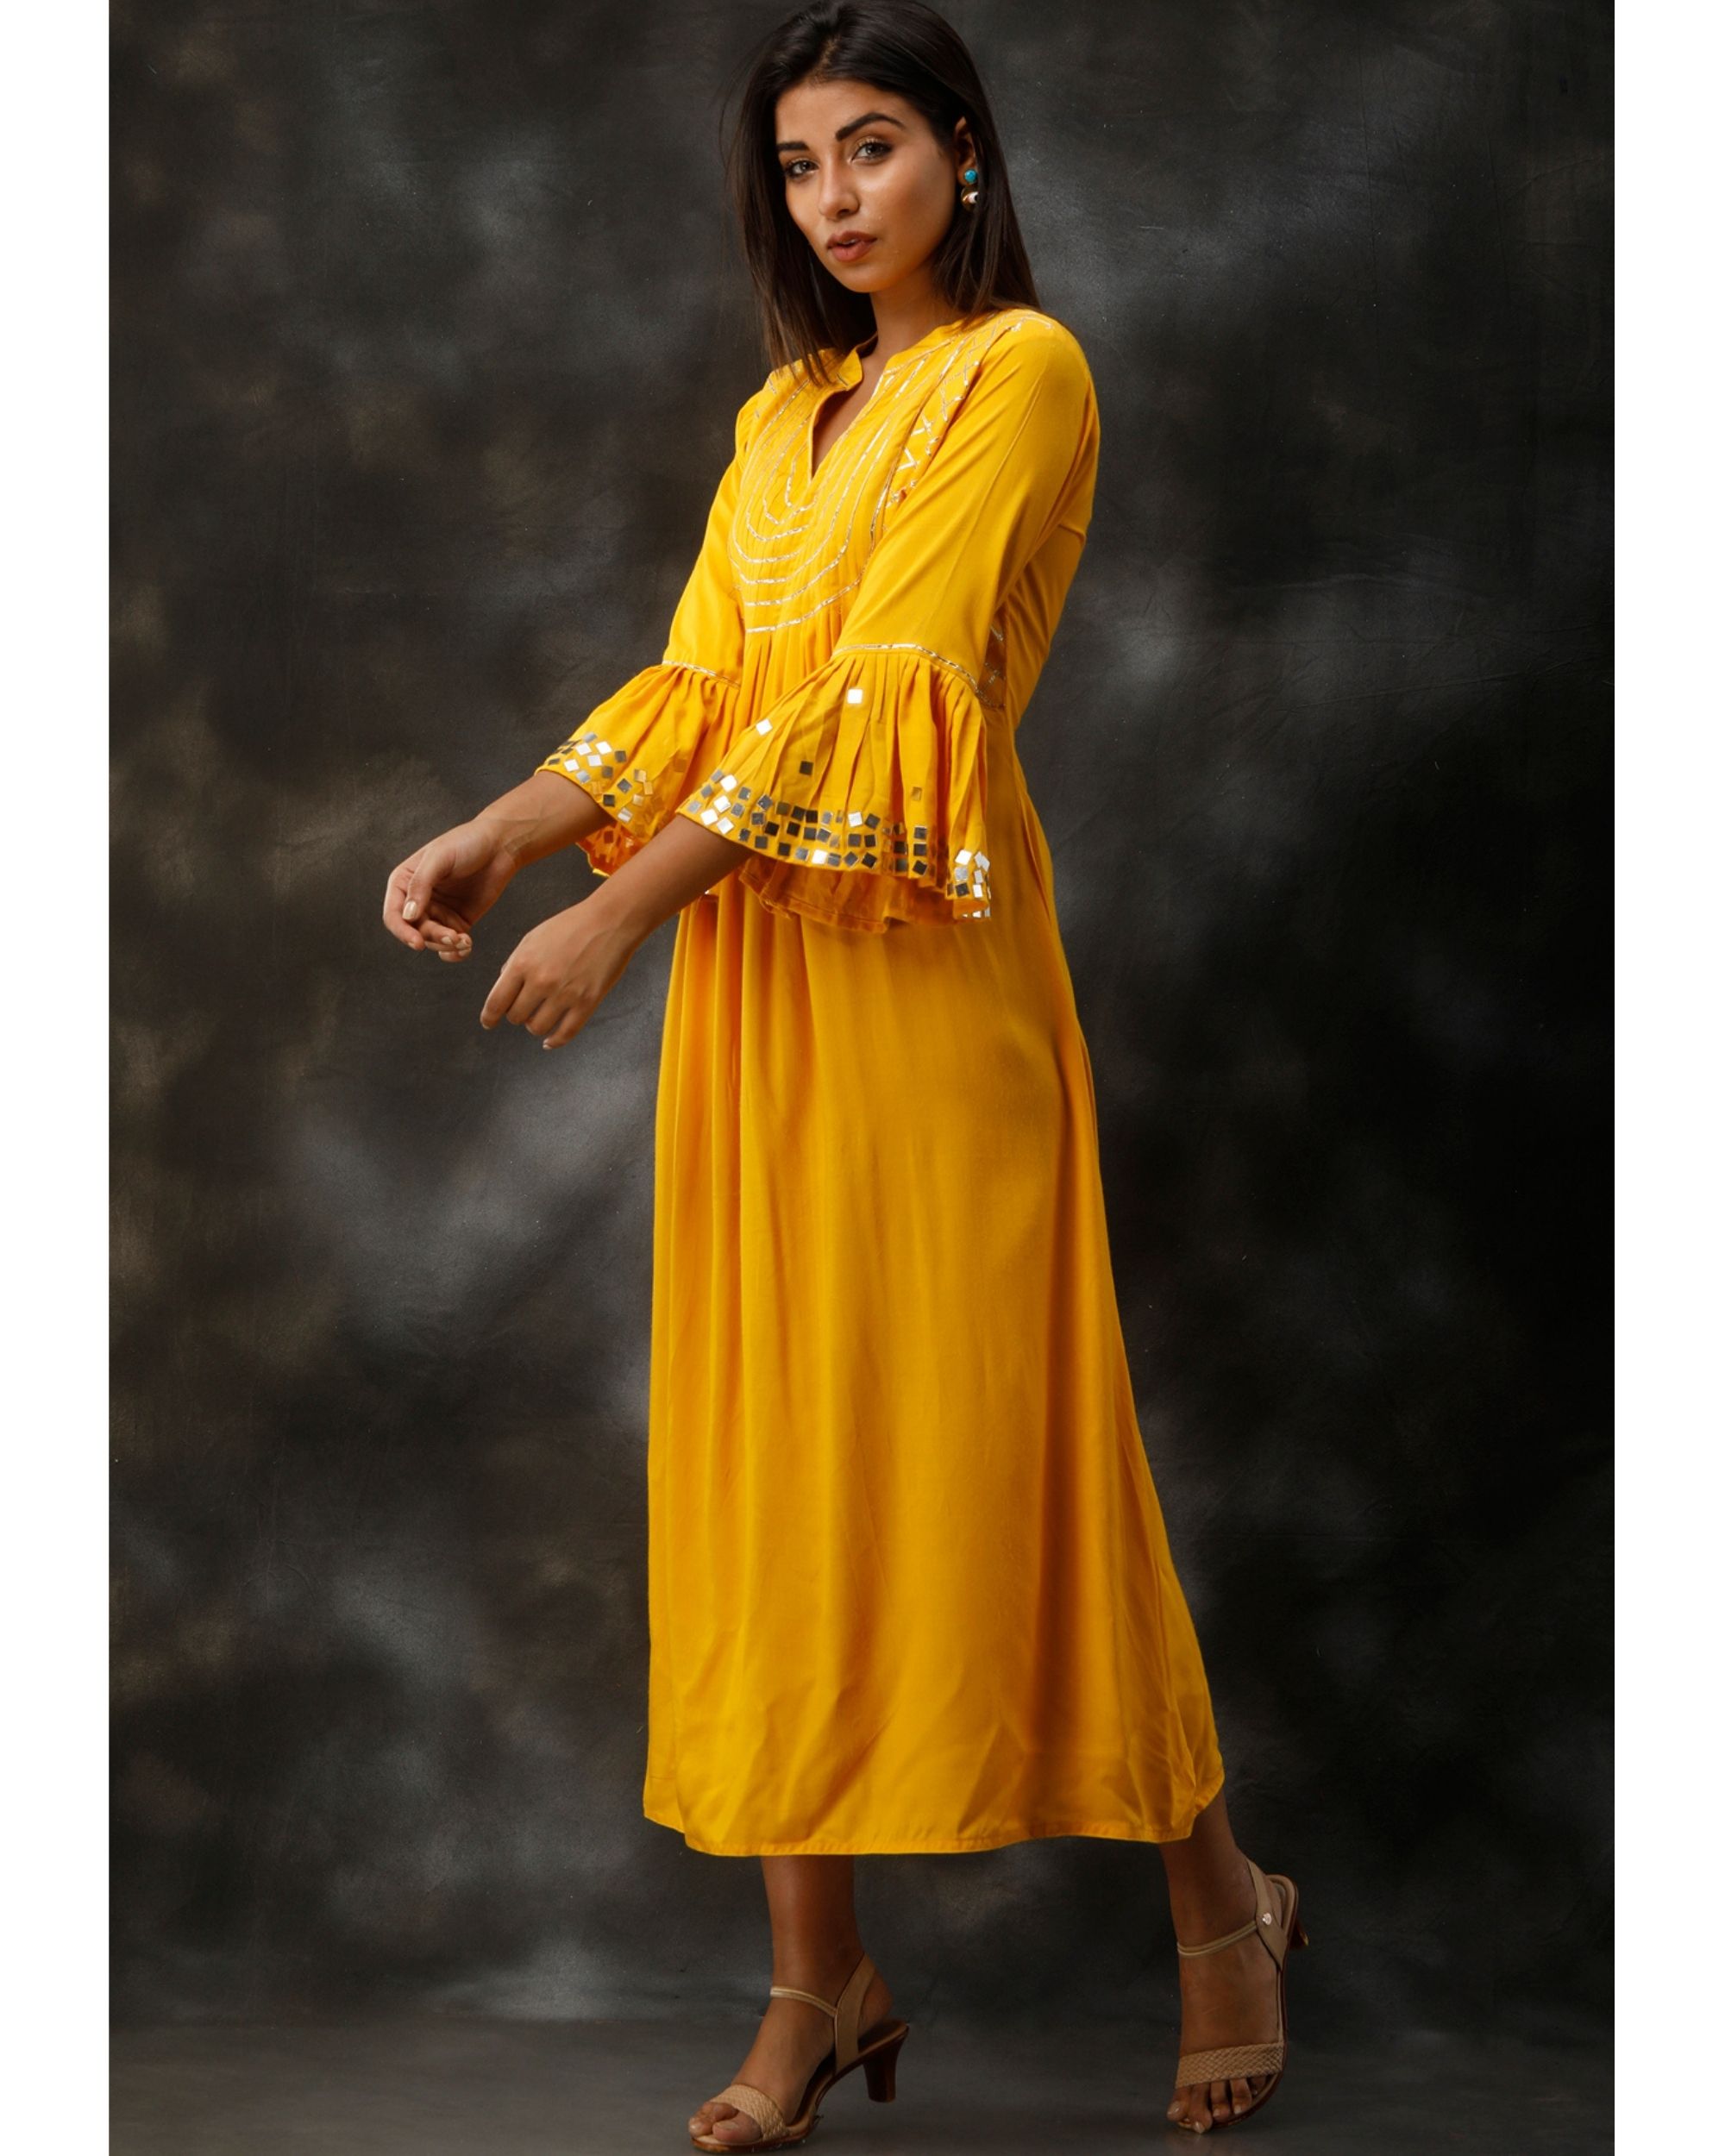 Mango yellow mirror work dress by Raw n Urban | The Secret Label